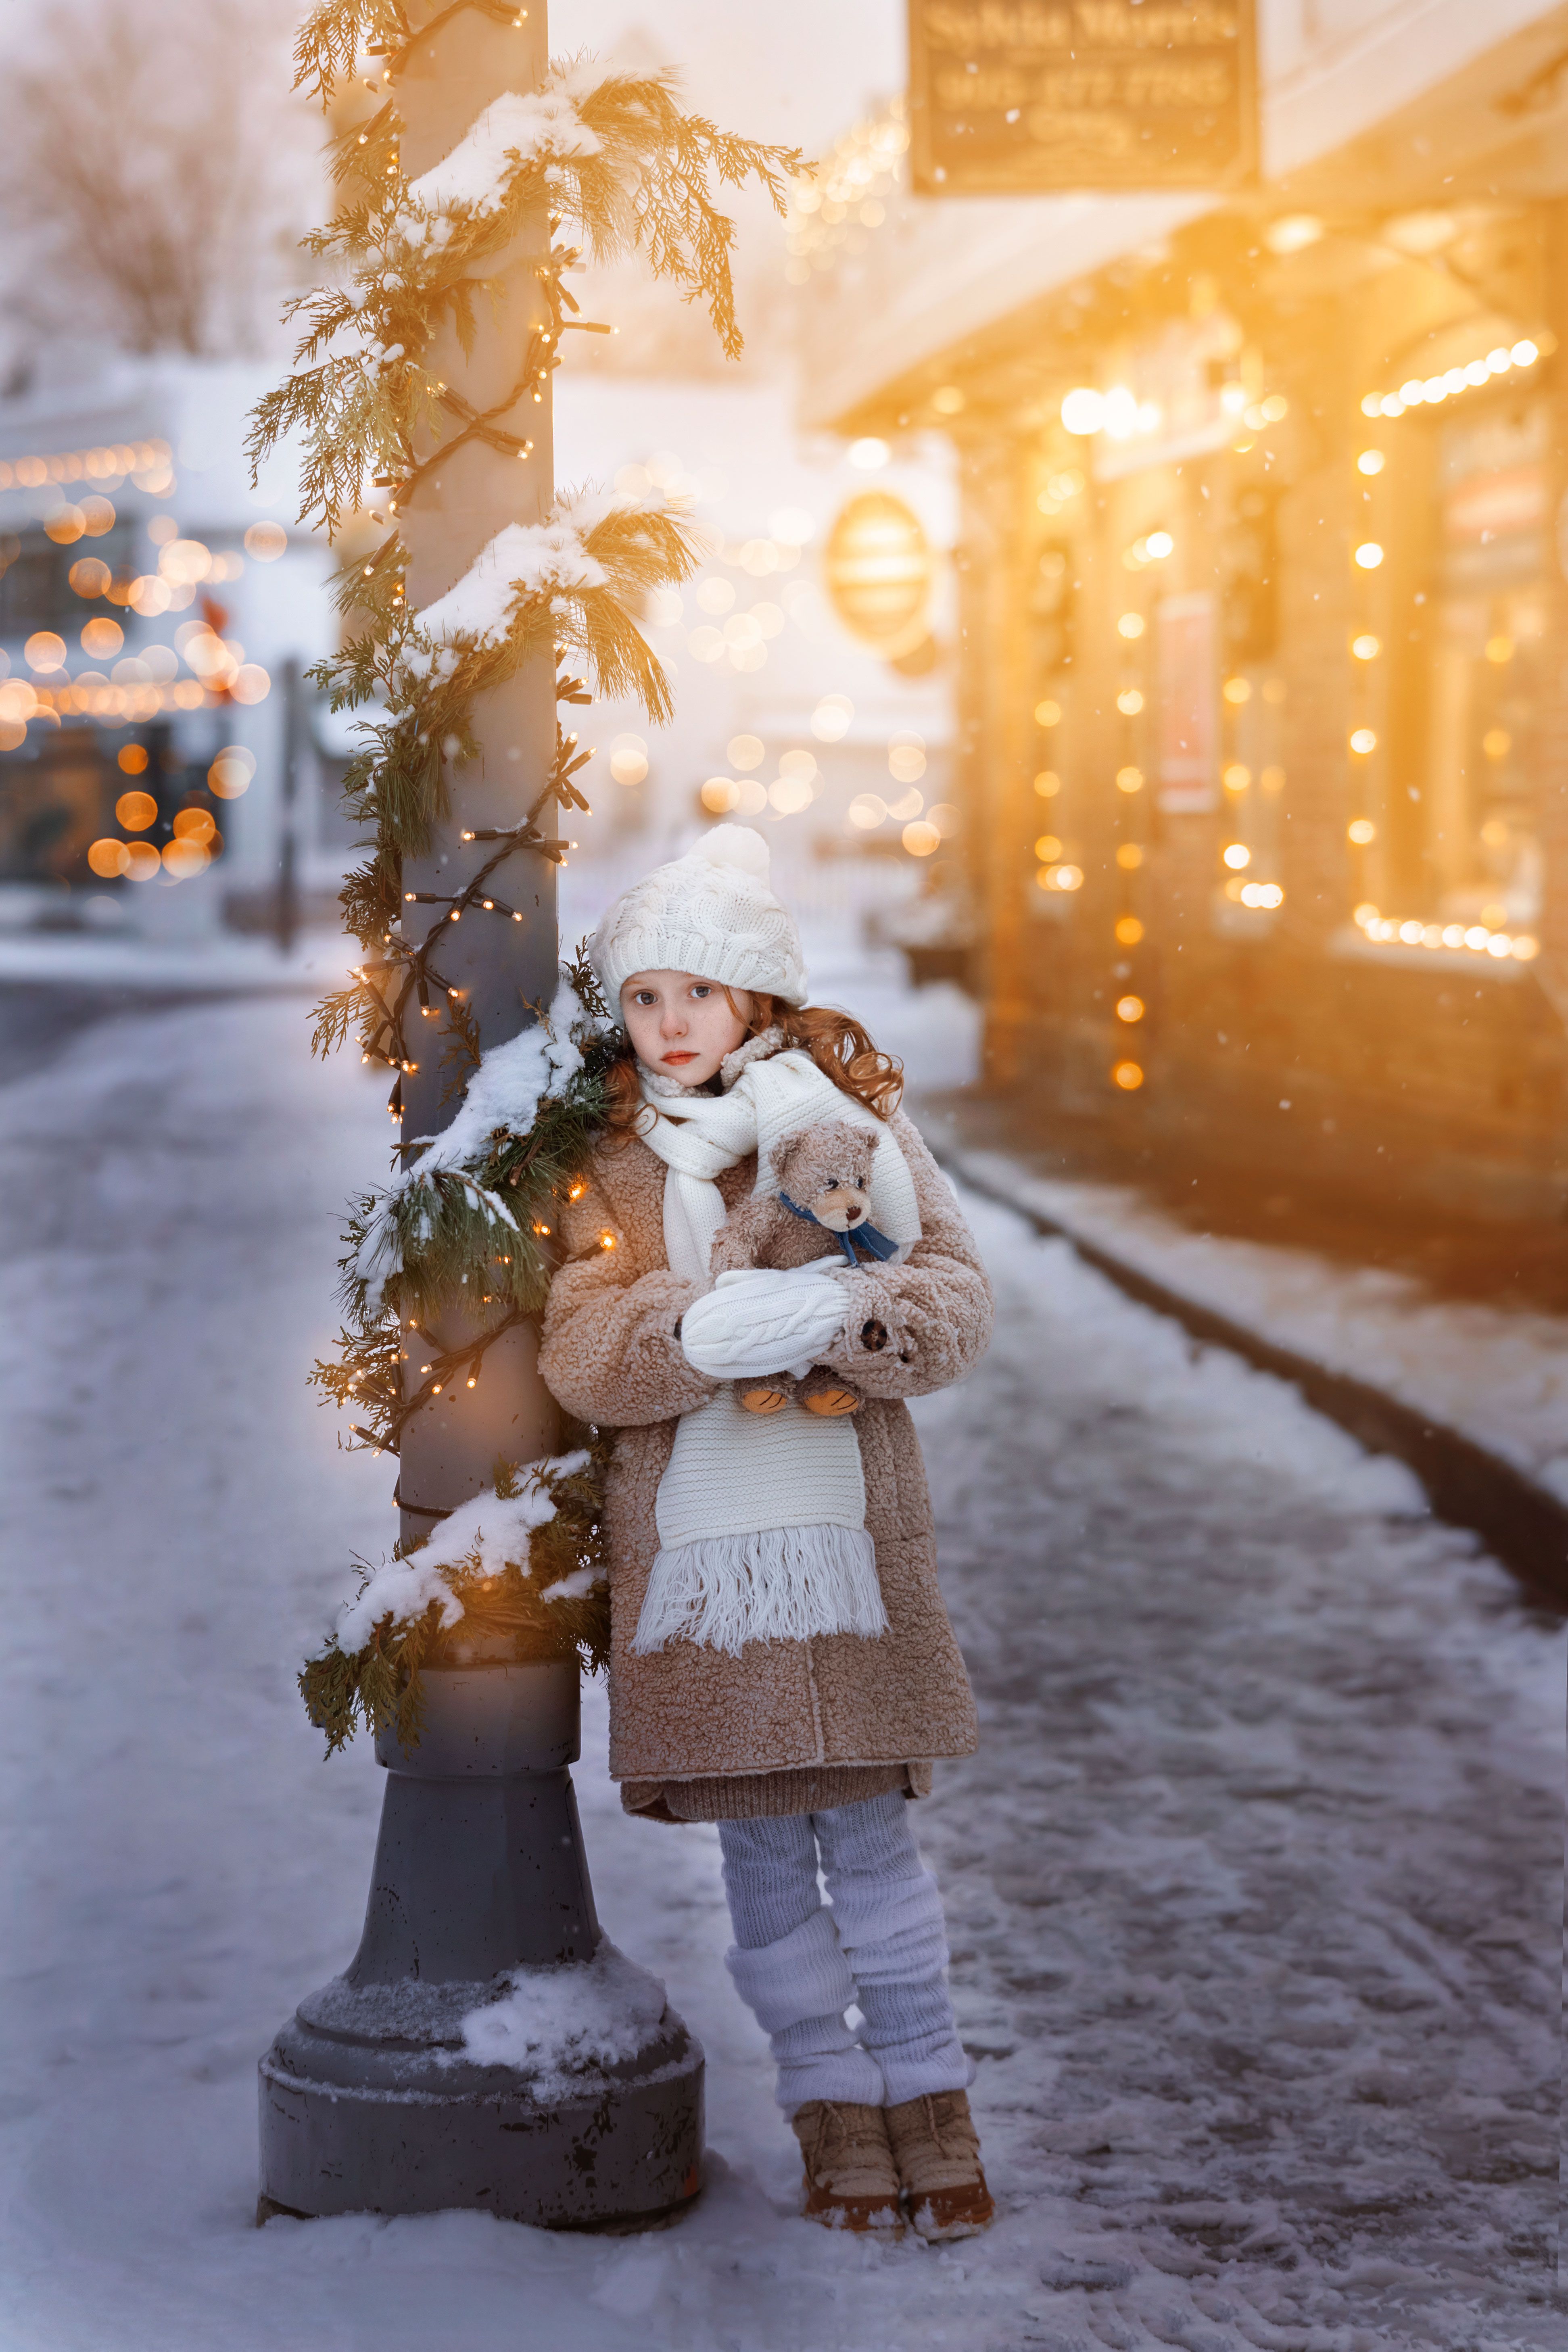 #christmas #christmaspresent #family #winter #outdoor #night #toronto #girl #kids #teddybear #childhood #street, Irina Kornienko